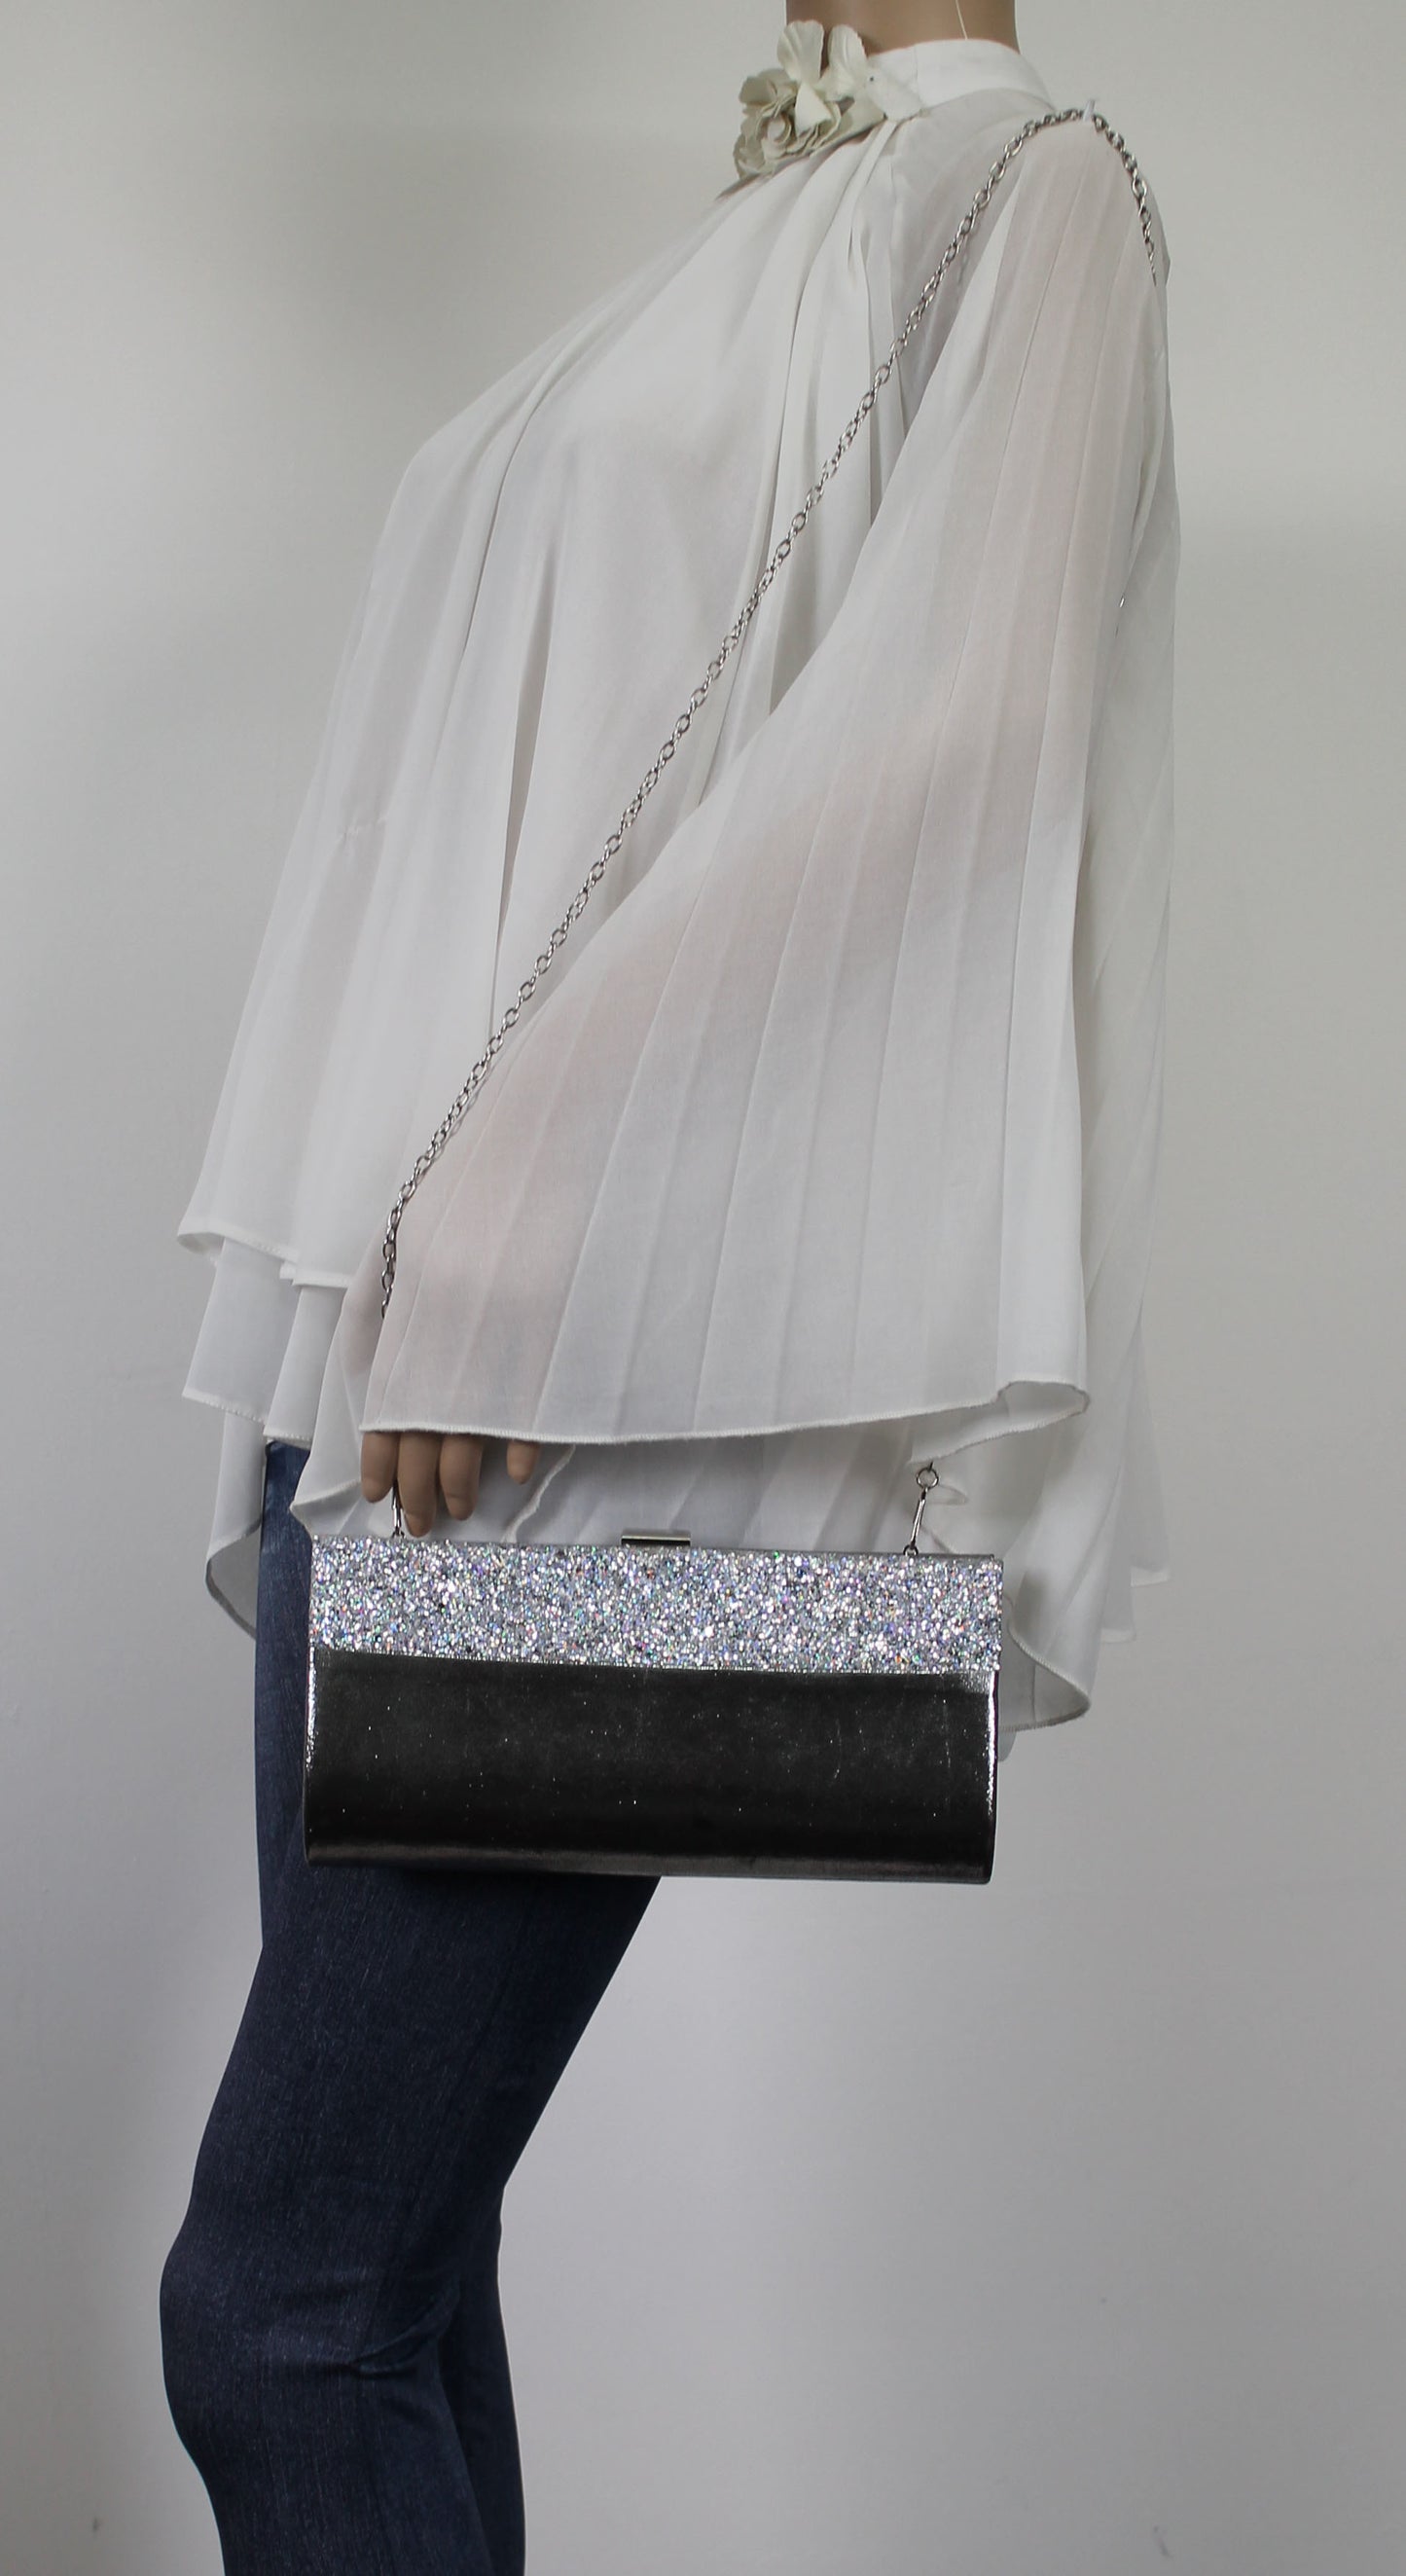 SWANKYSWANS Kathy Glitter Clutch Bag Silver Cute Cheap Clutch Bag For Weddings School and Work